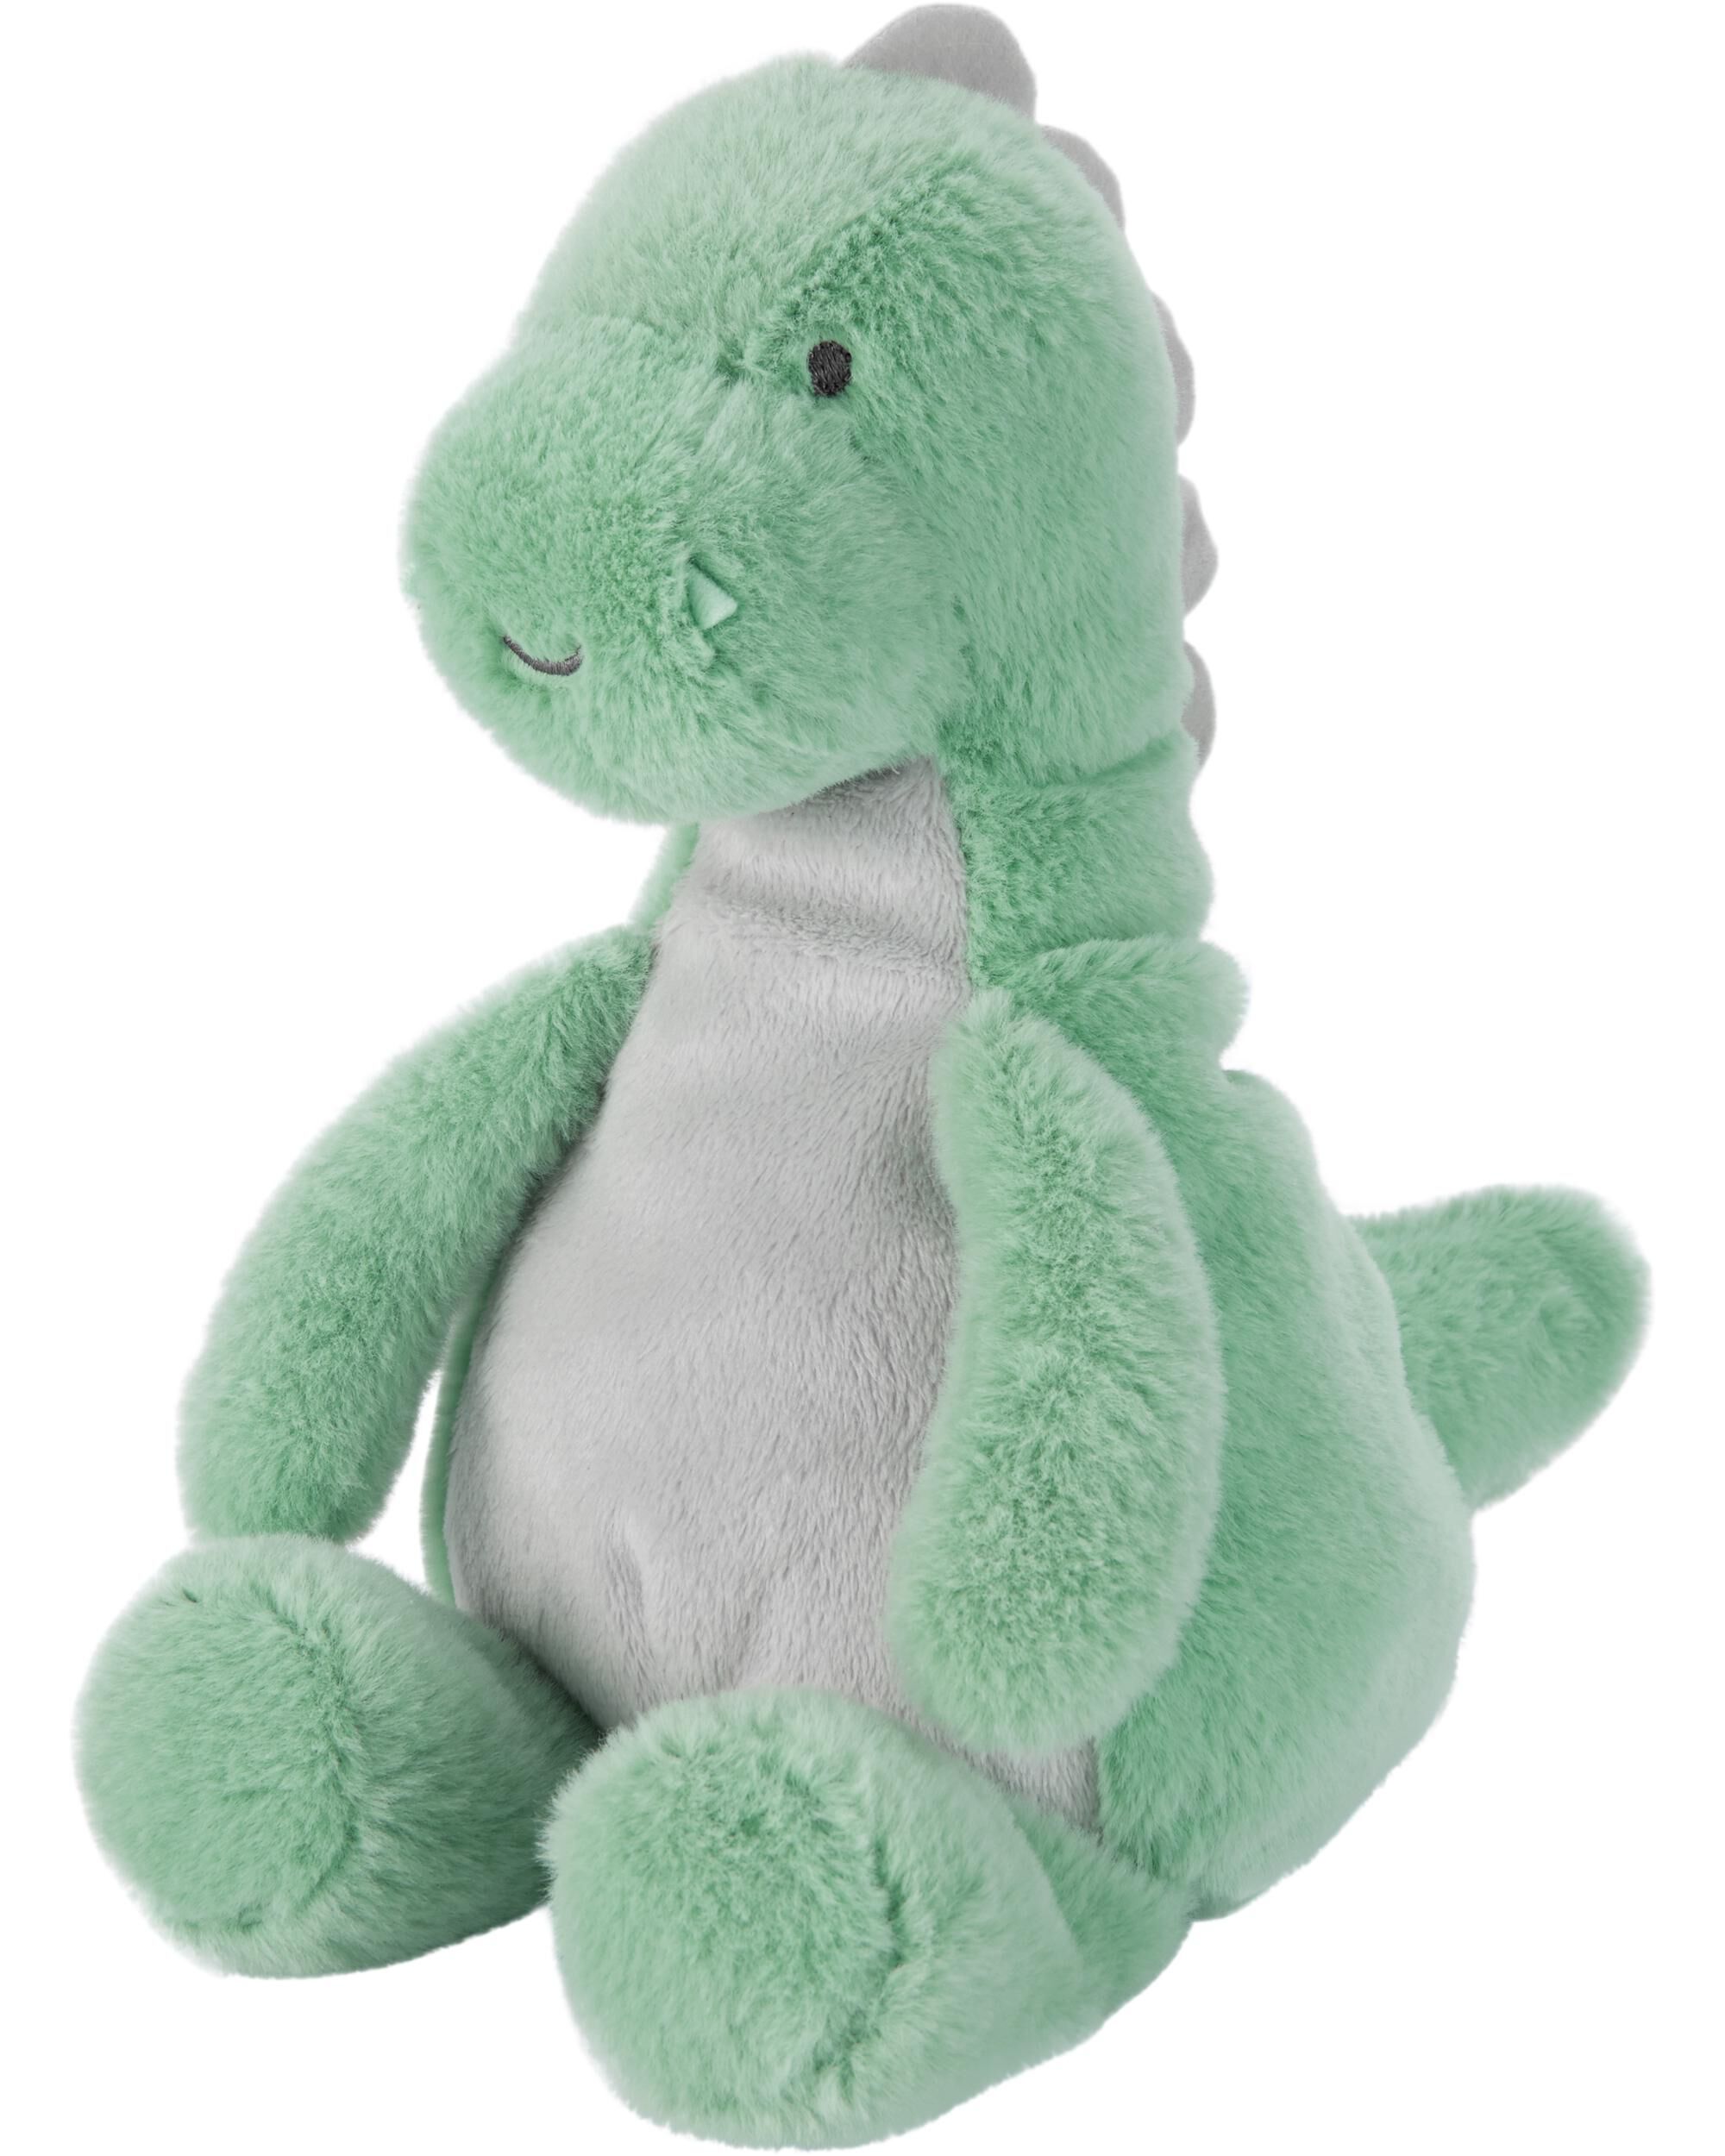 dinosaur stuffed animal for baby